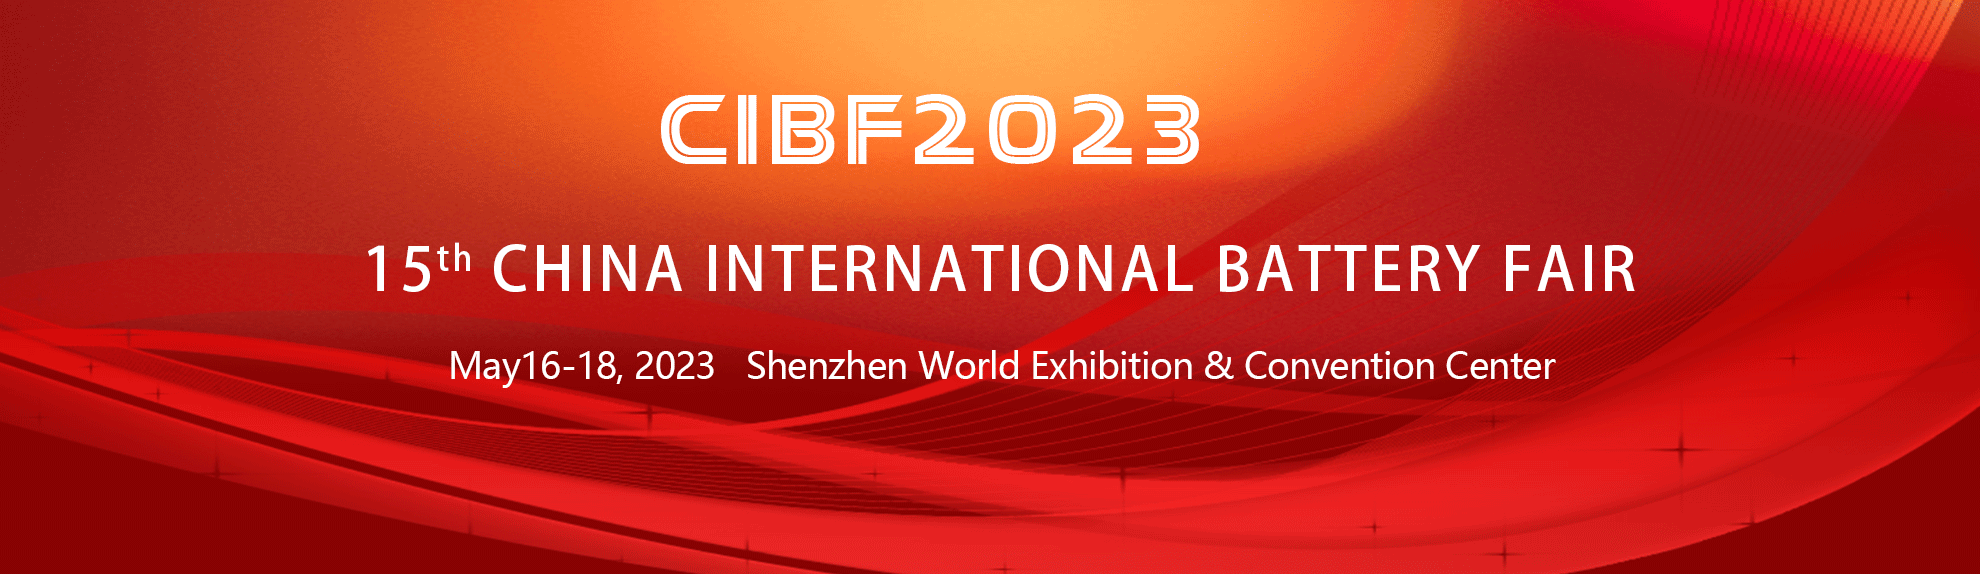 CIBF China International Battery Fair 2023»